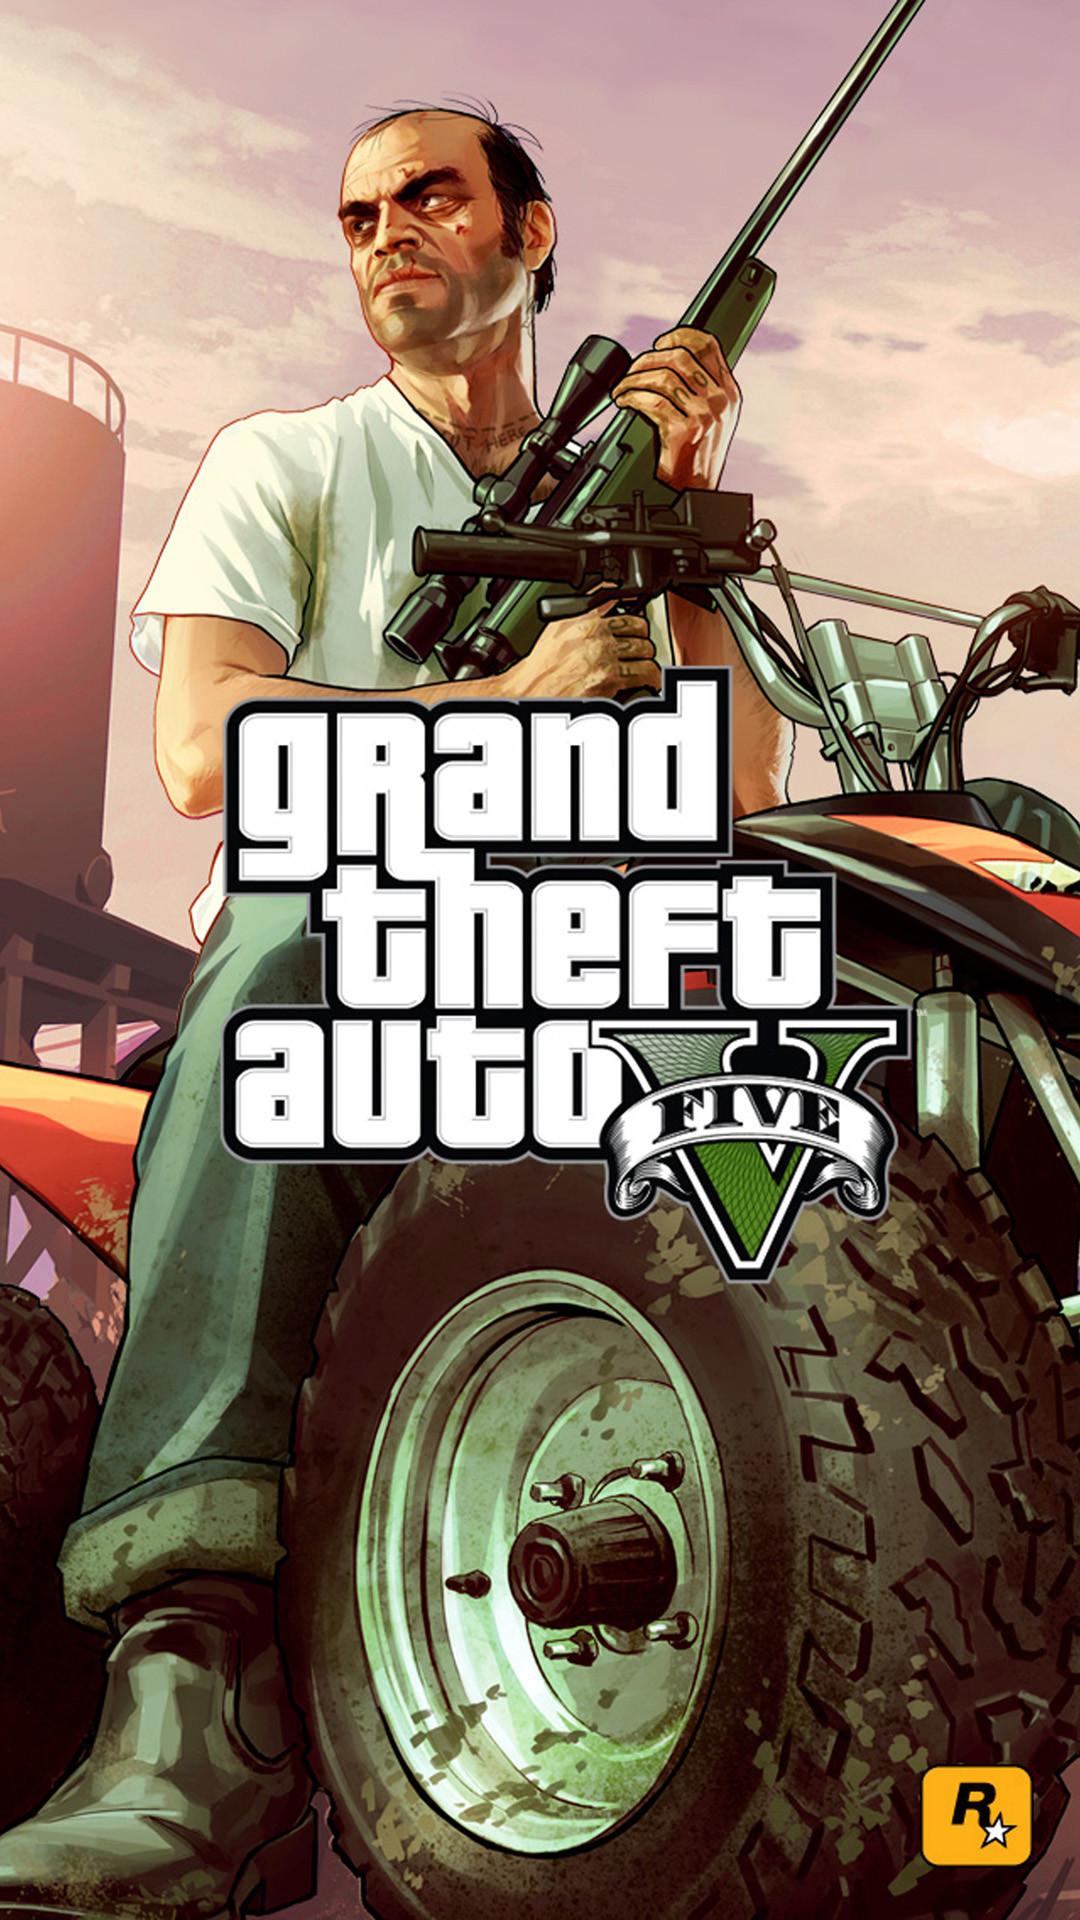 Hội Grand Theft Auto V Online  Ảnh nền  Wallpaper 4K cho anh em trên PC  httpcdnmoscmsfuturecdnnetfC6HvmeEwyteQuYBMr4UrSpng  Facebook